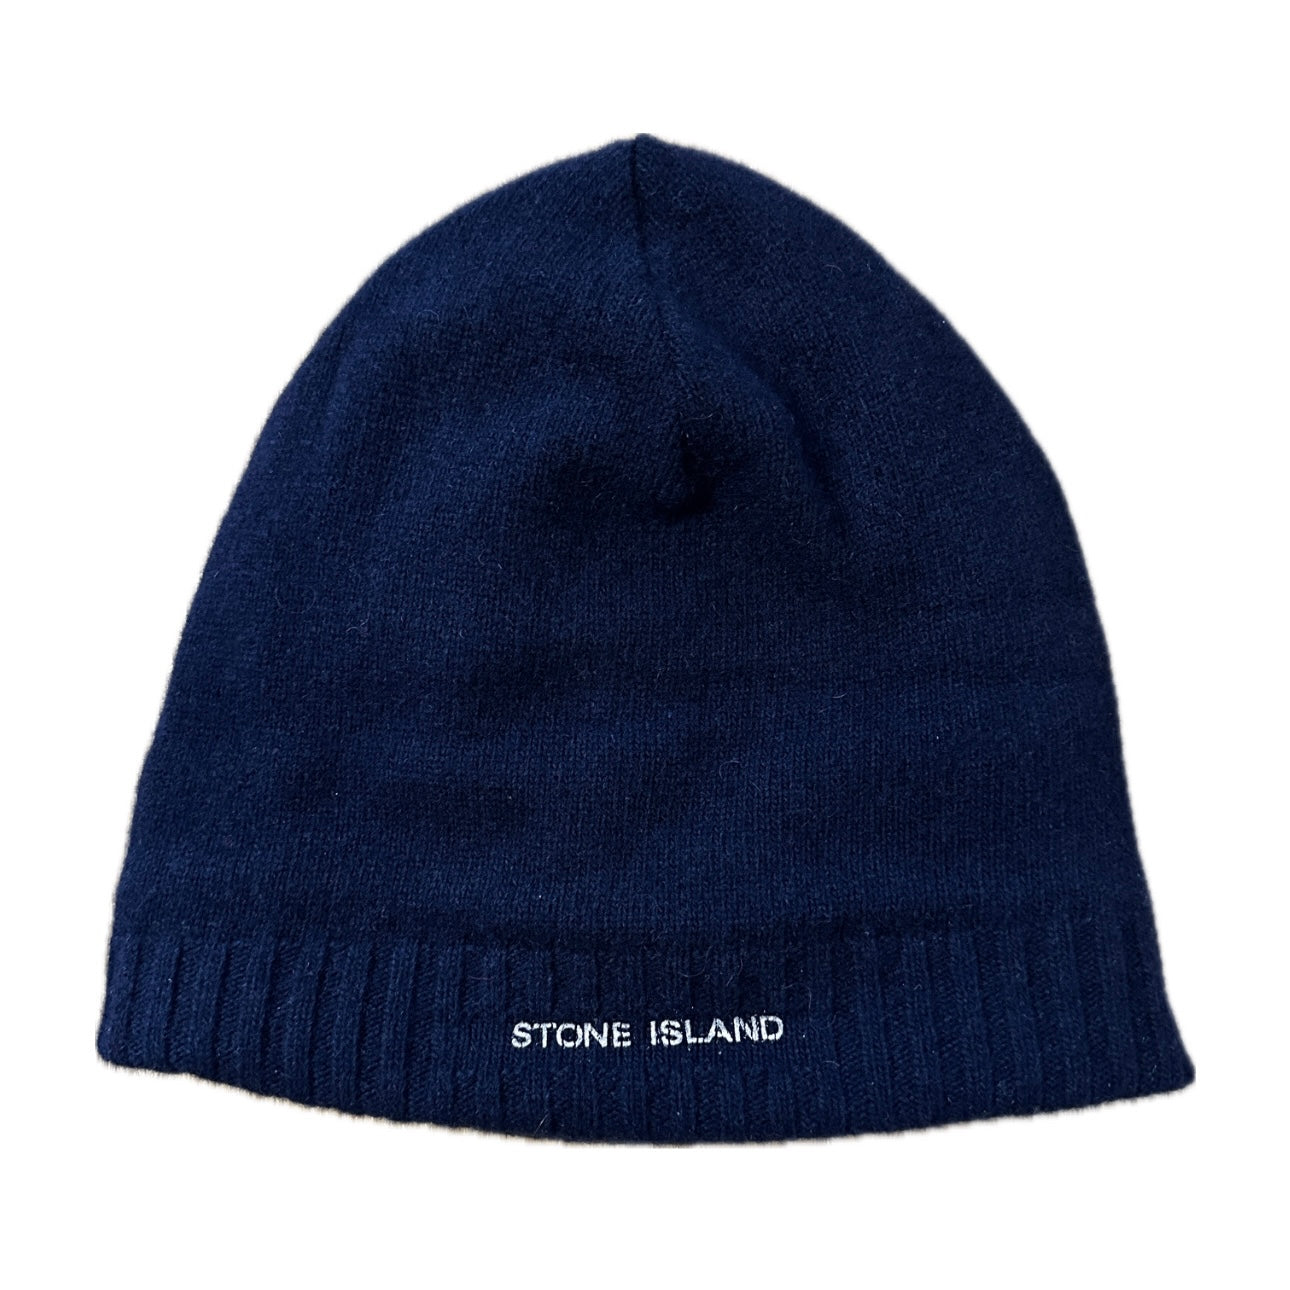 Stone Island Reversible Knit Hat Navy - One Size